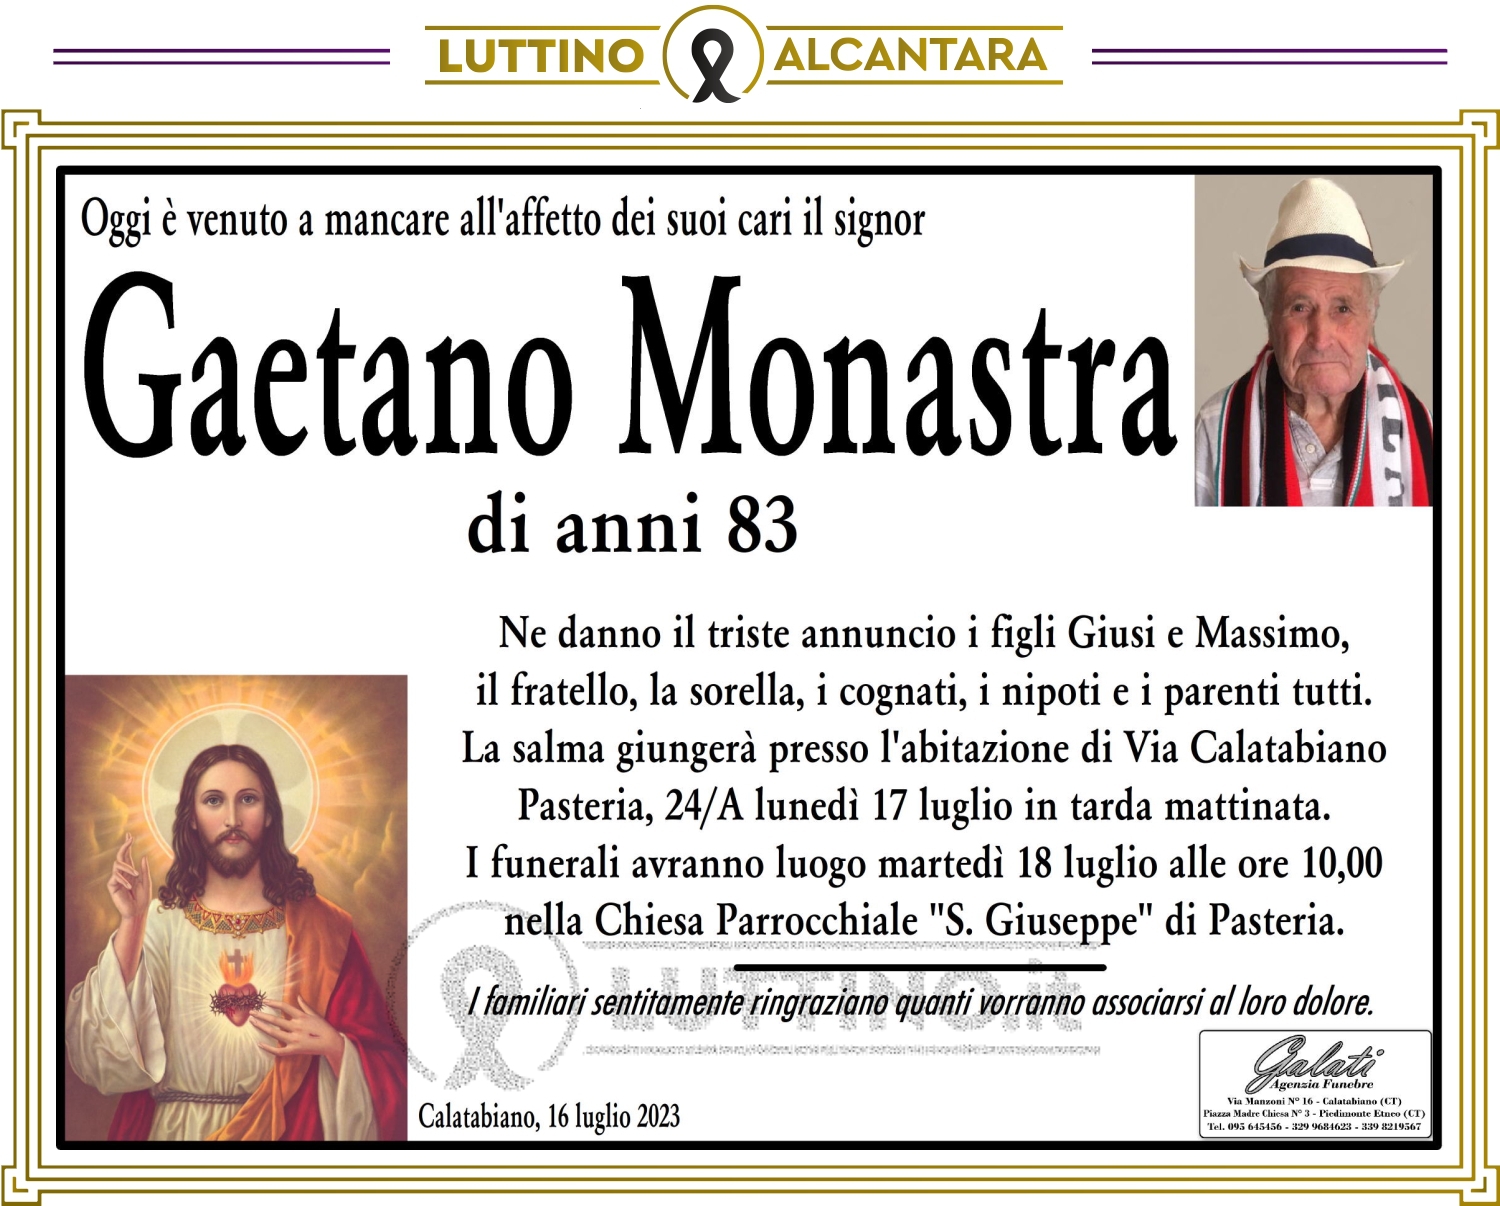 Gaetano Monastra